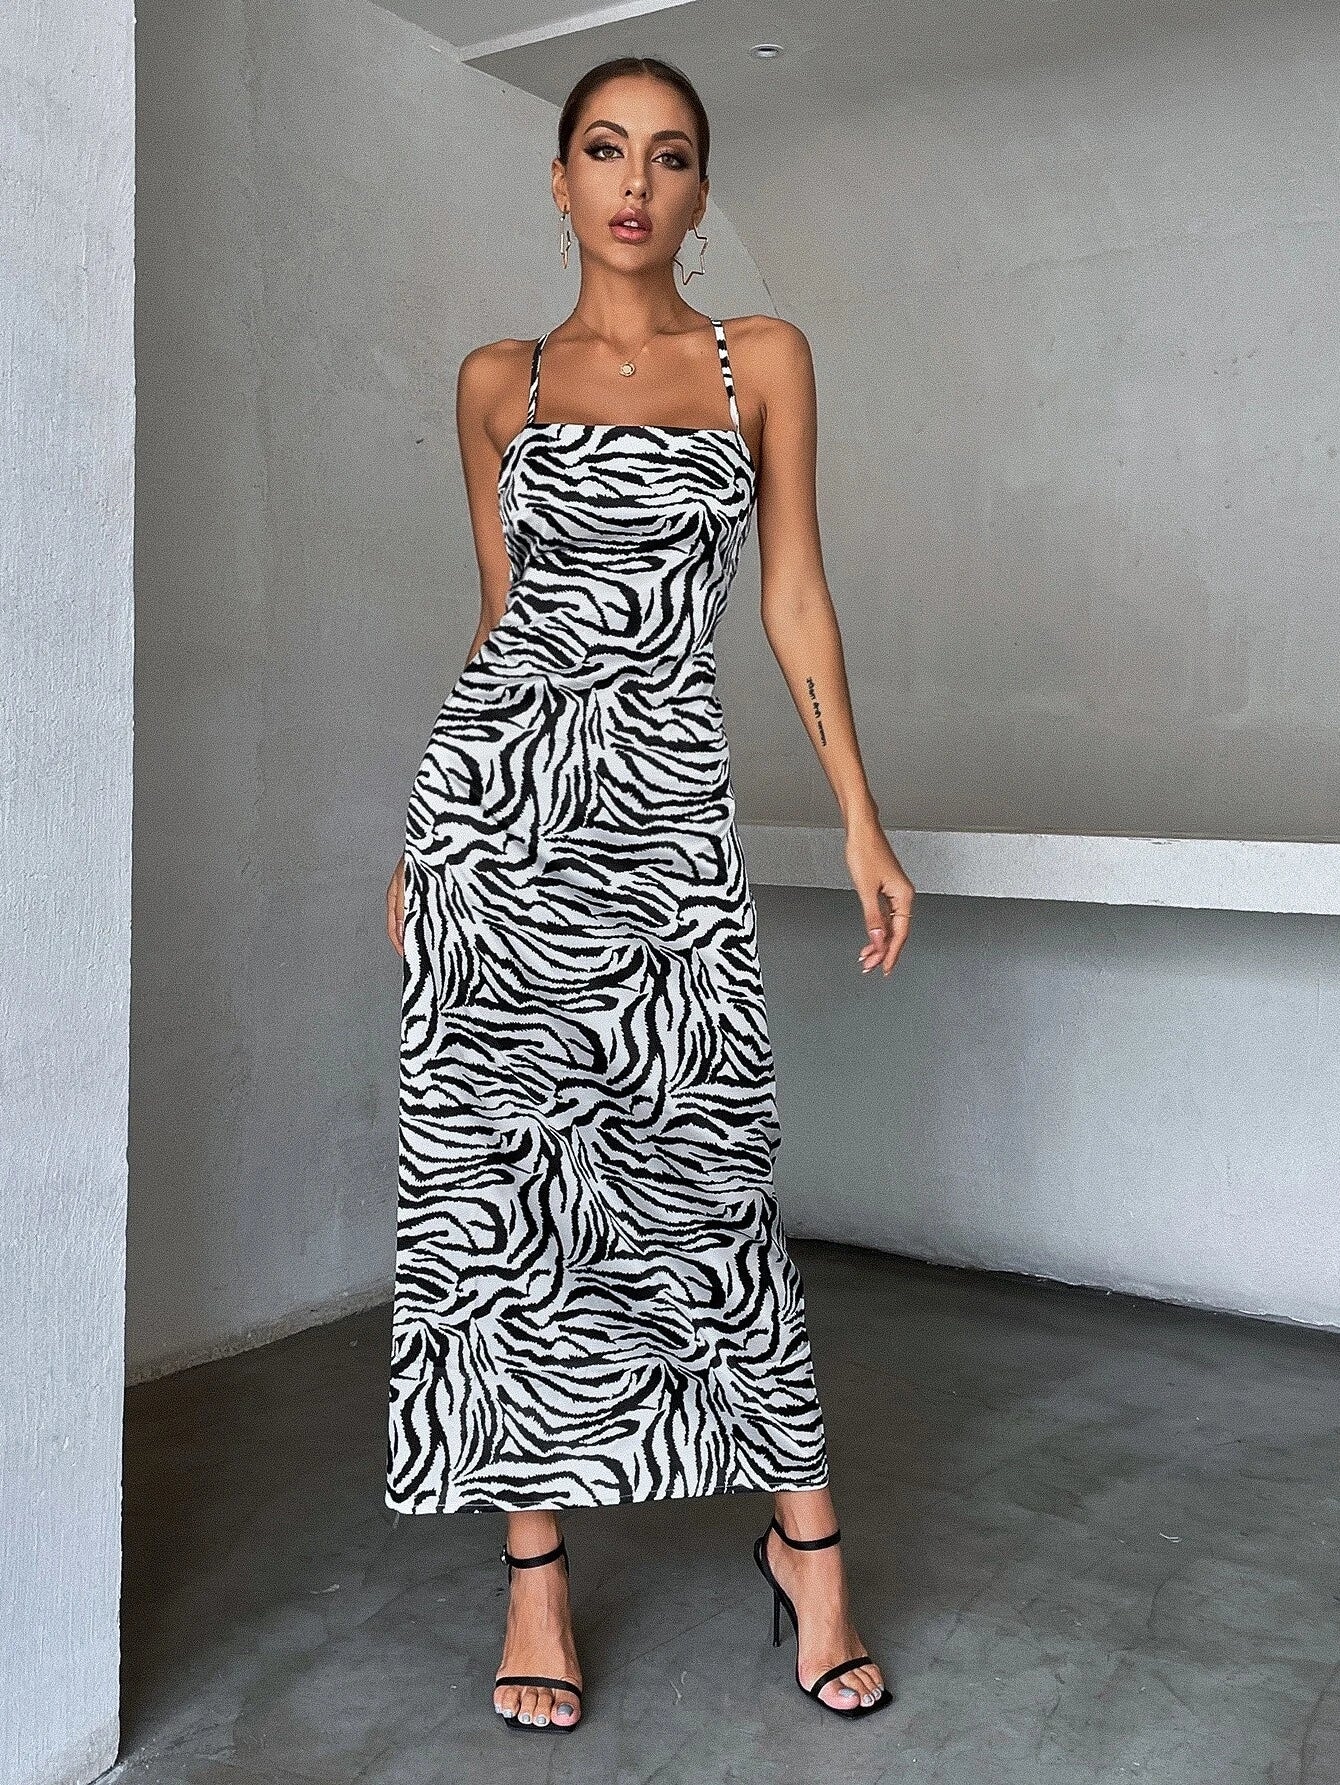 Striped Black And White Animal Print  Back Slim Fit Slip Dress aclosy